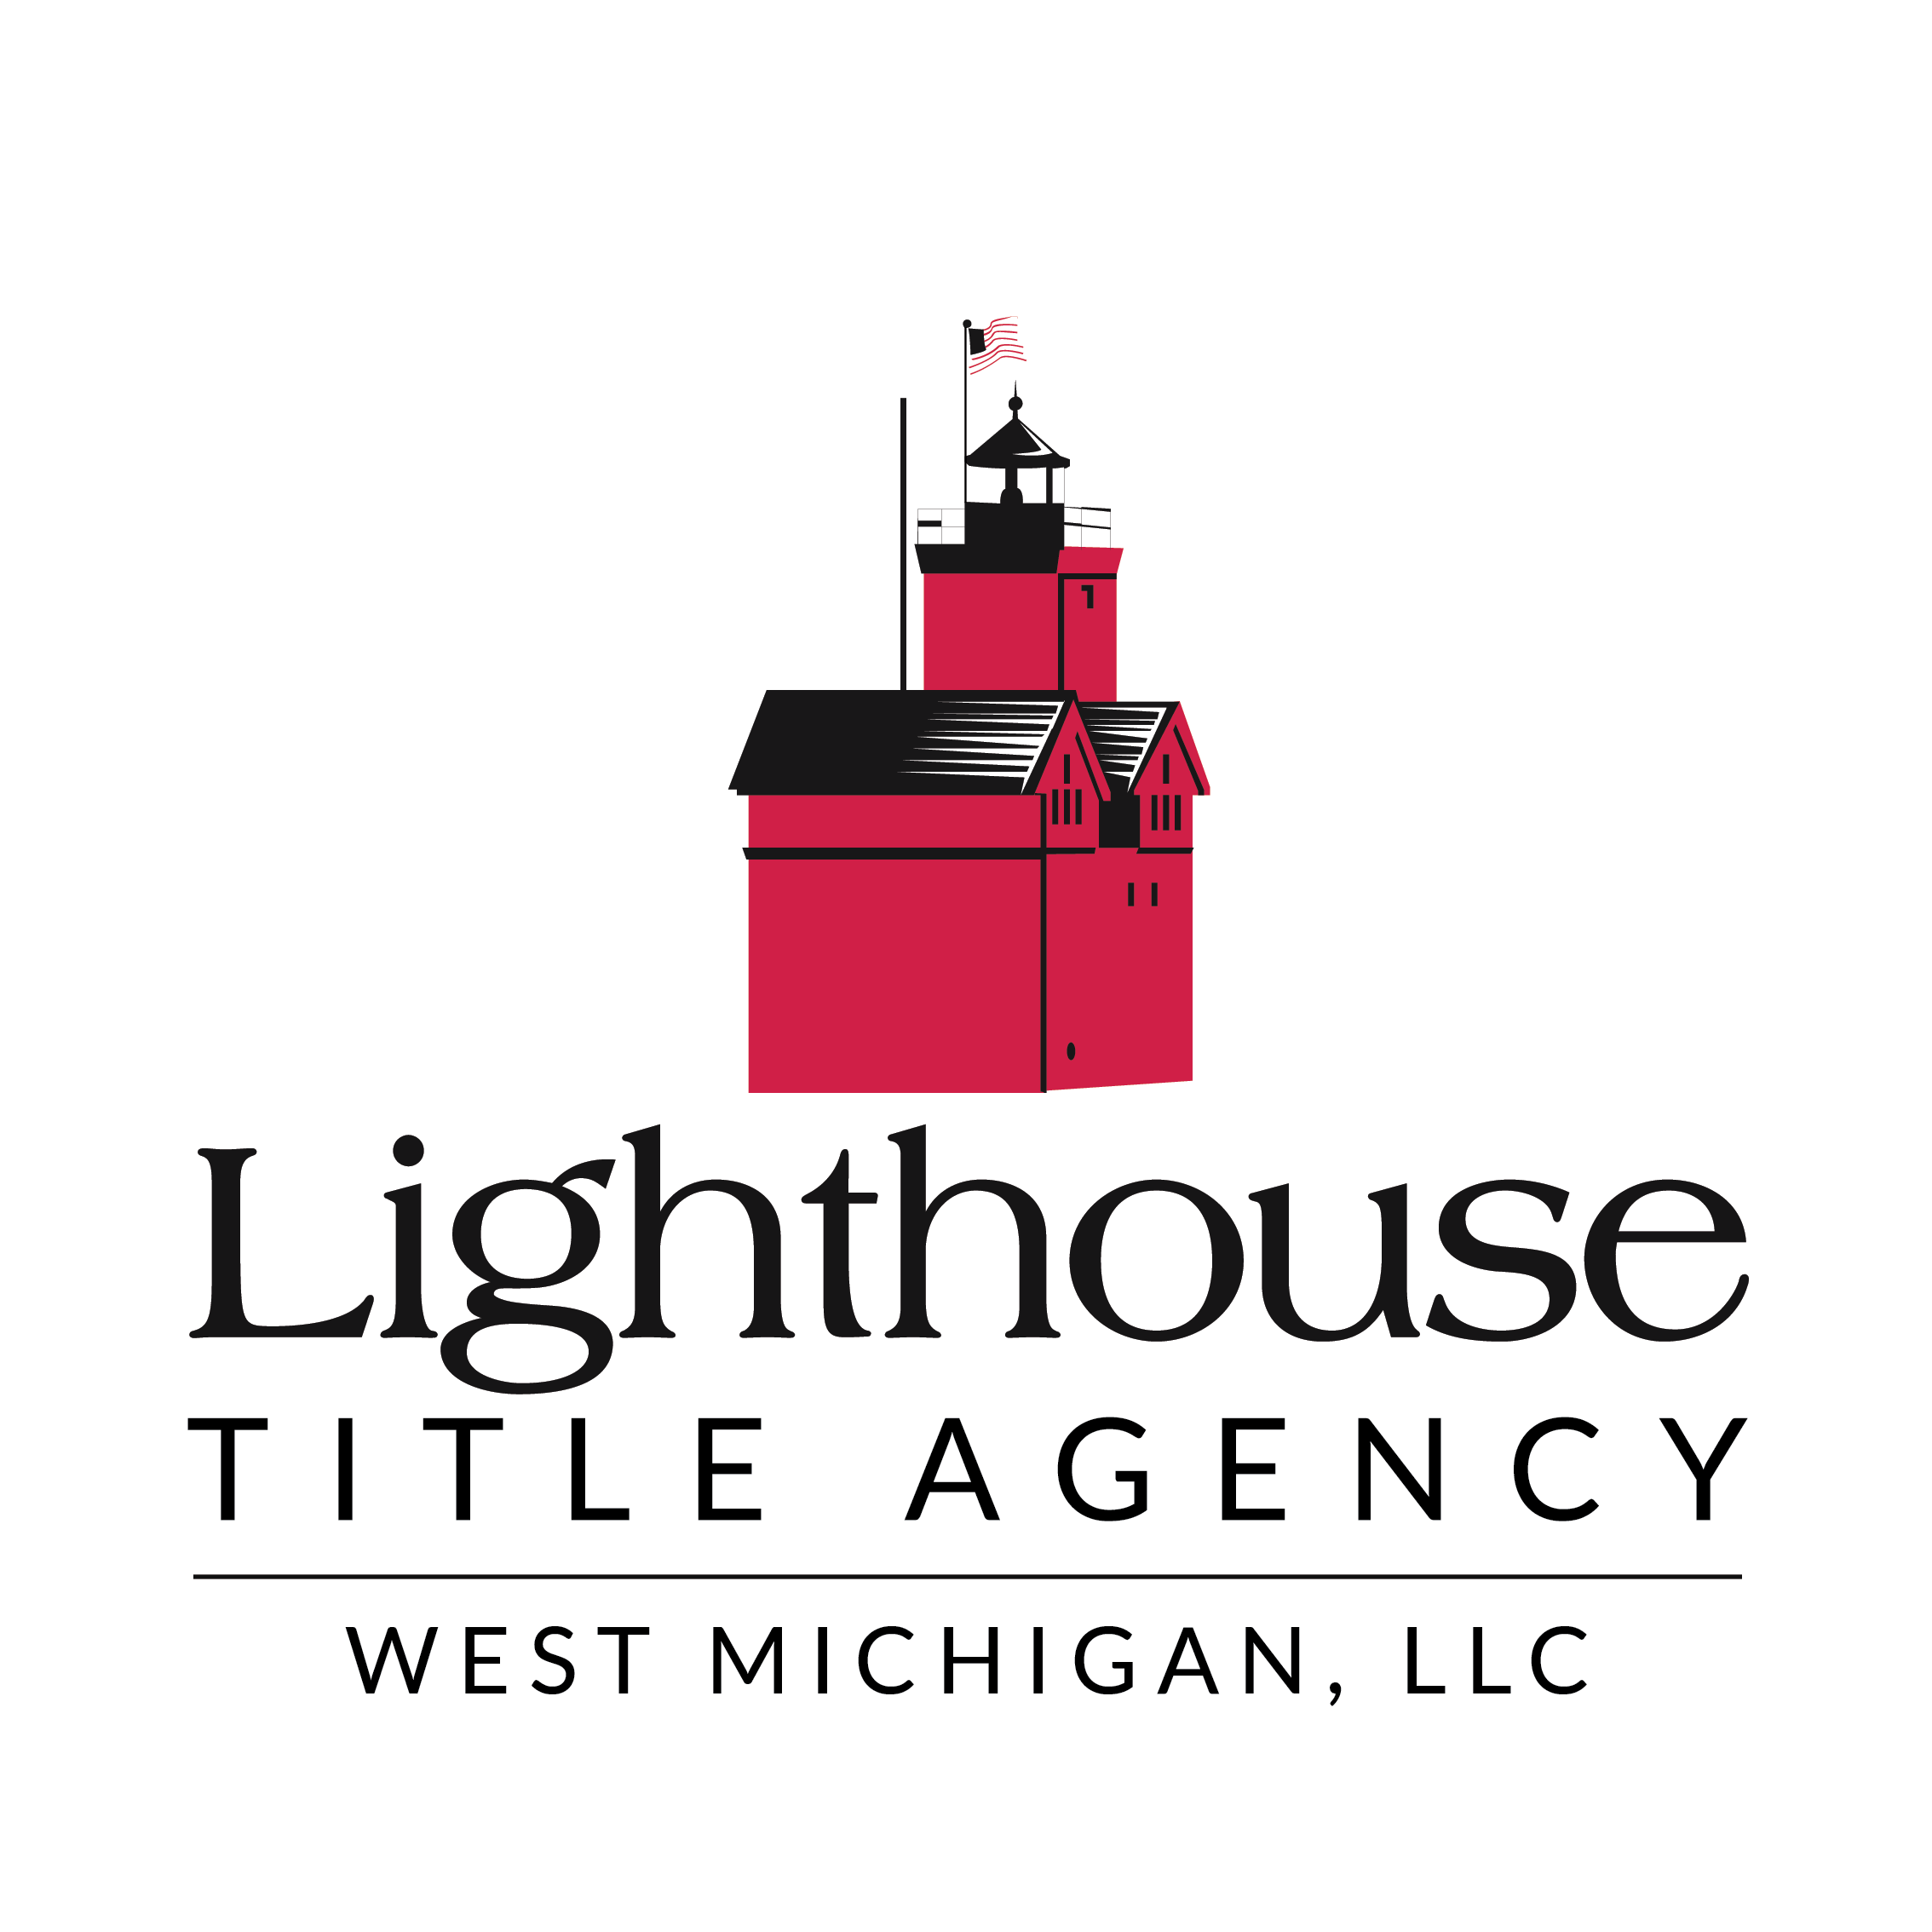 Lighthouse Title Agency - West Michigan, LLC